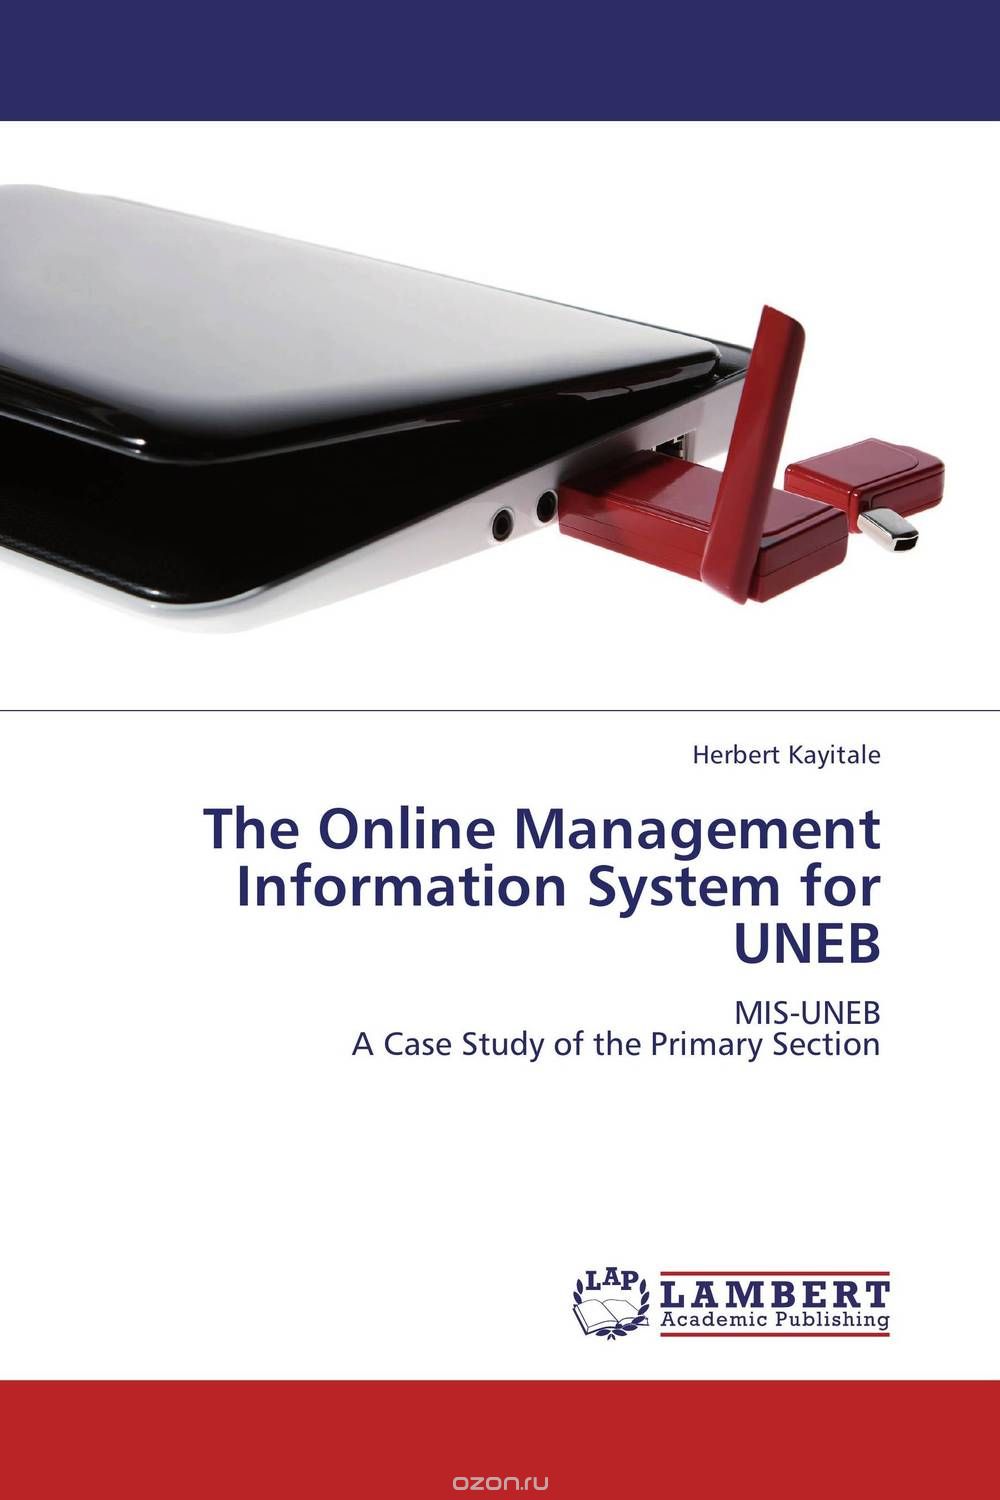 Скачать книгу "The Online Management Information System for UNEB"